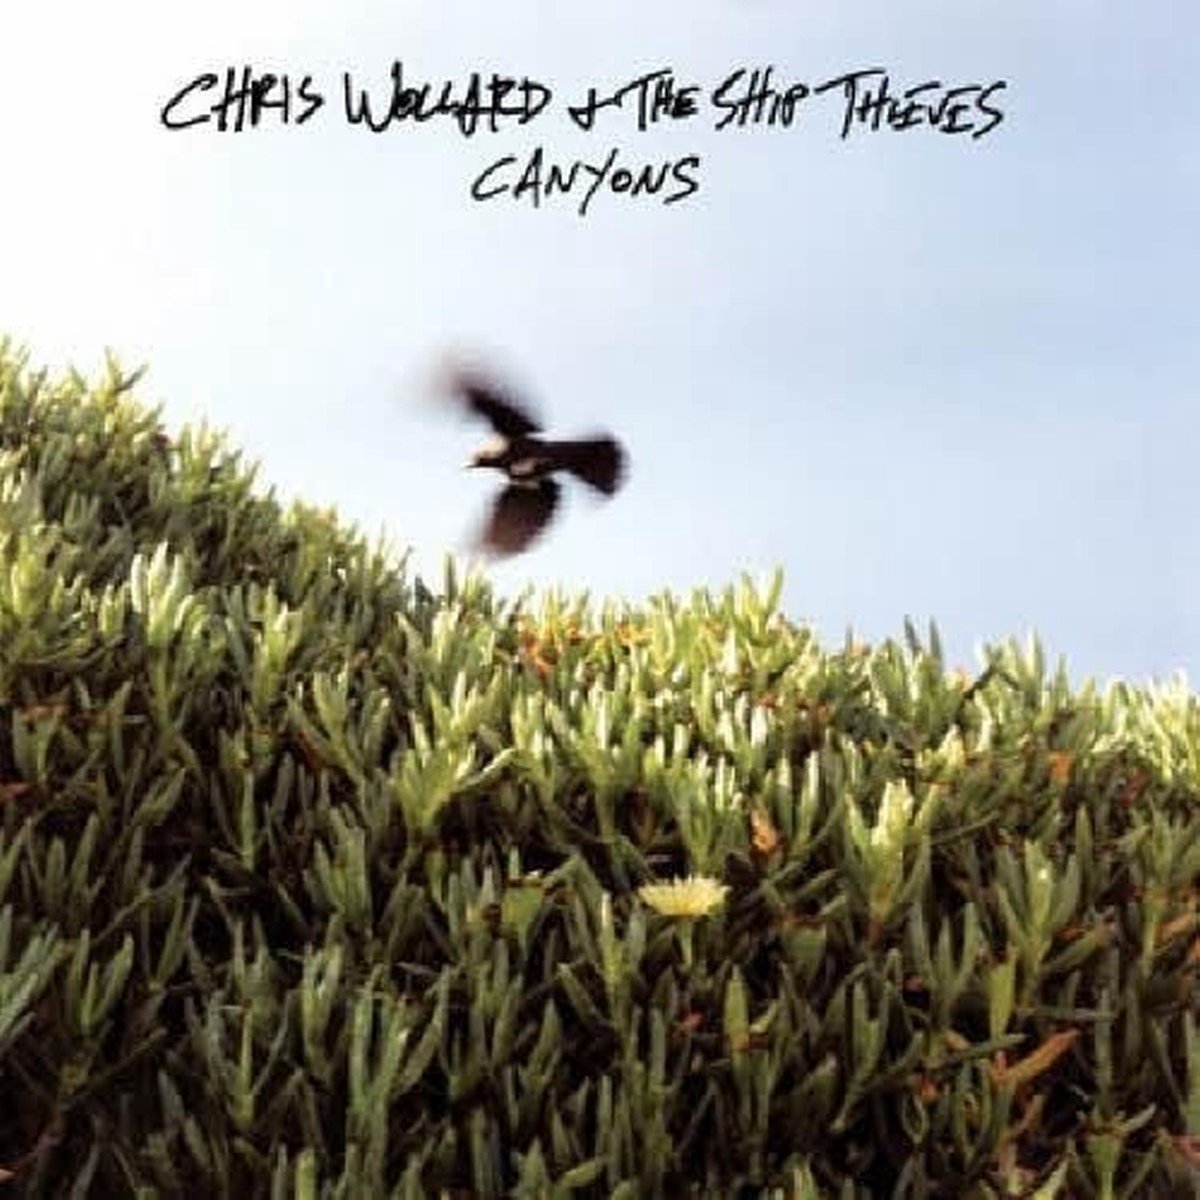 Chris Wollard & The Ship Thieves - Canyons (CD)